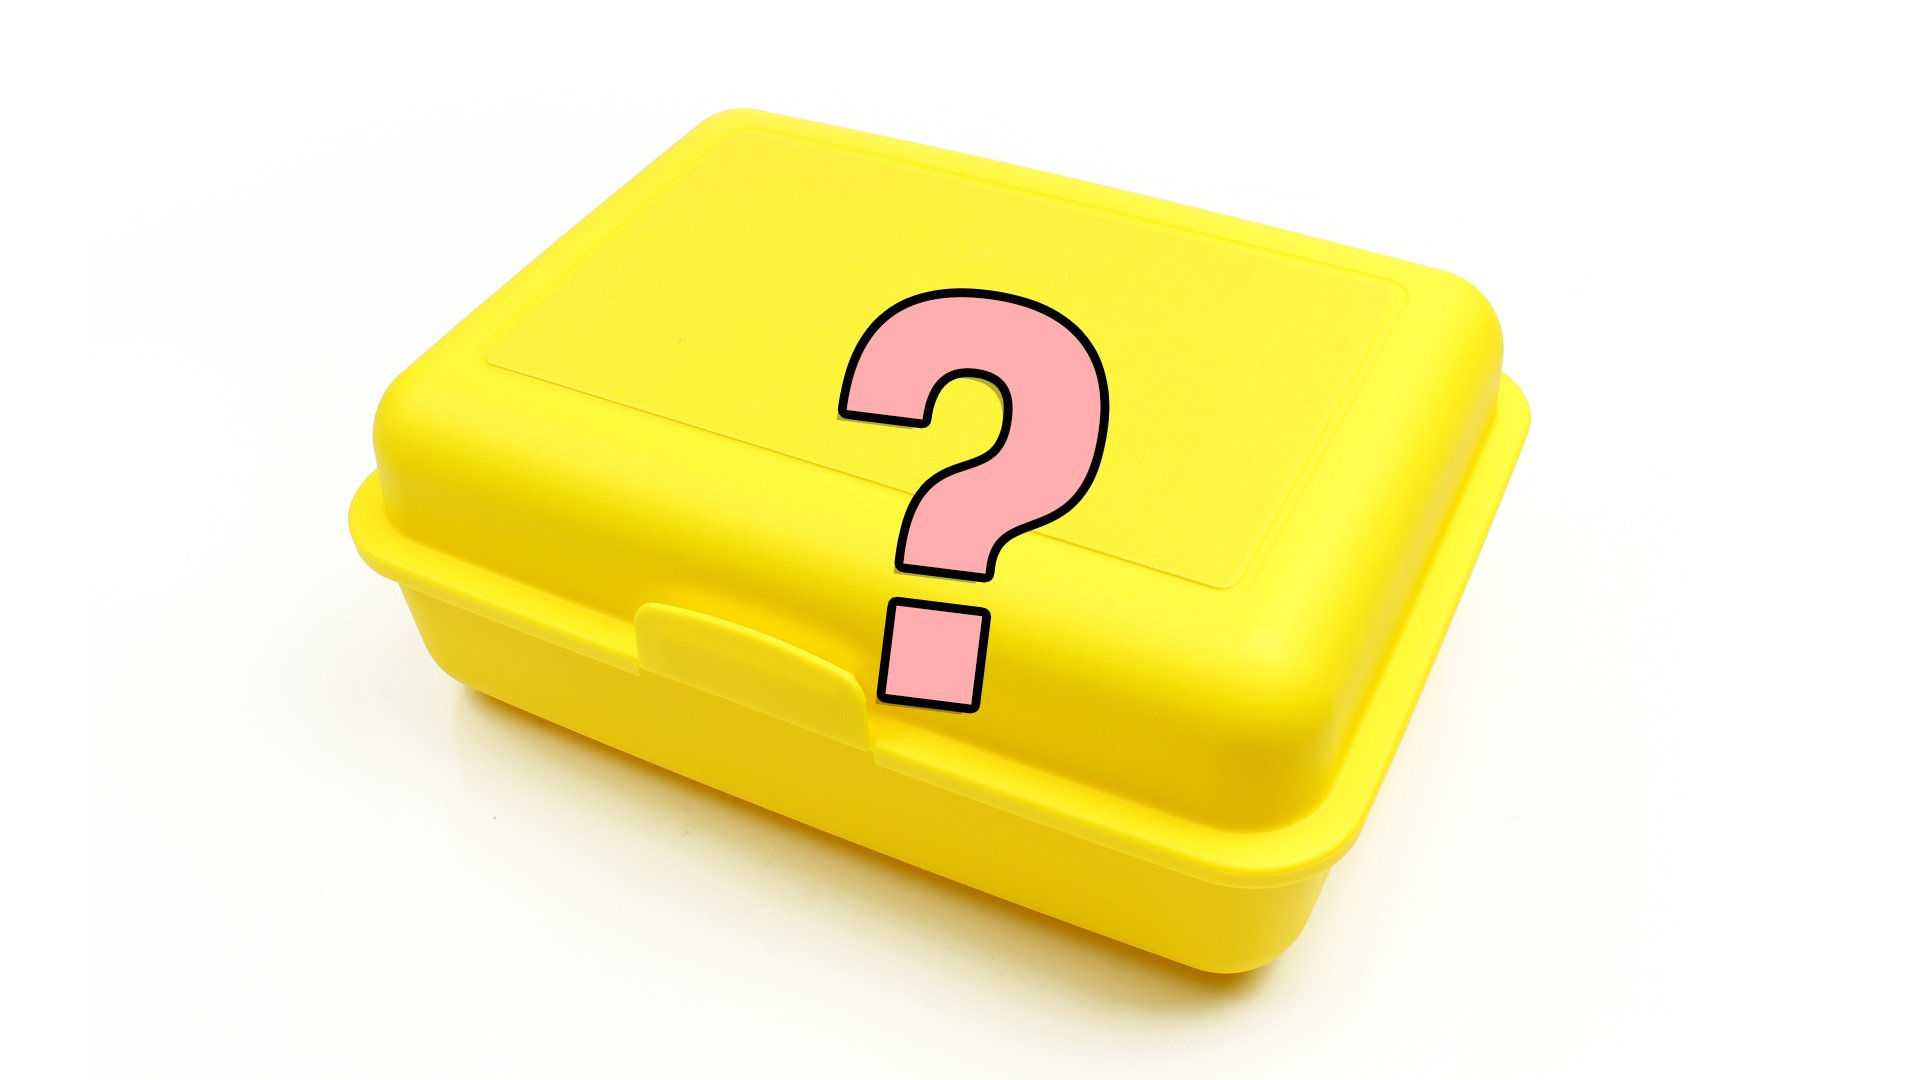 A mystery lunchbox